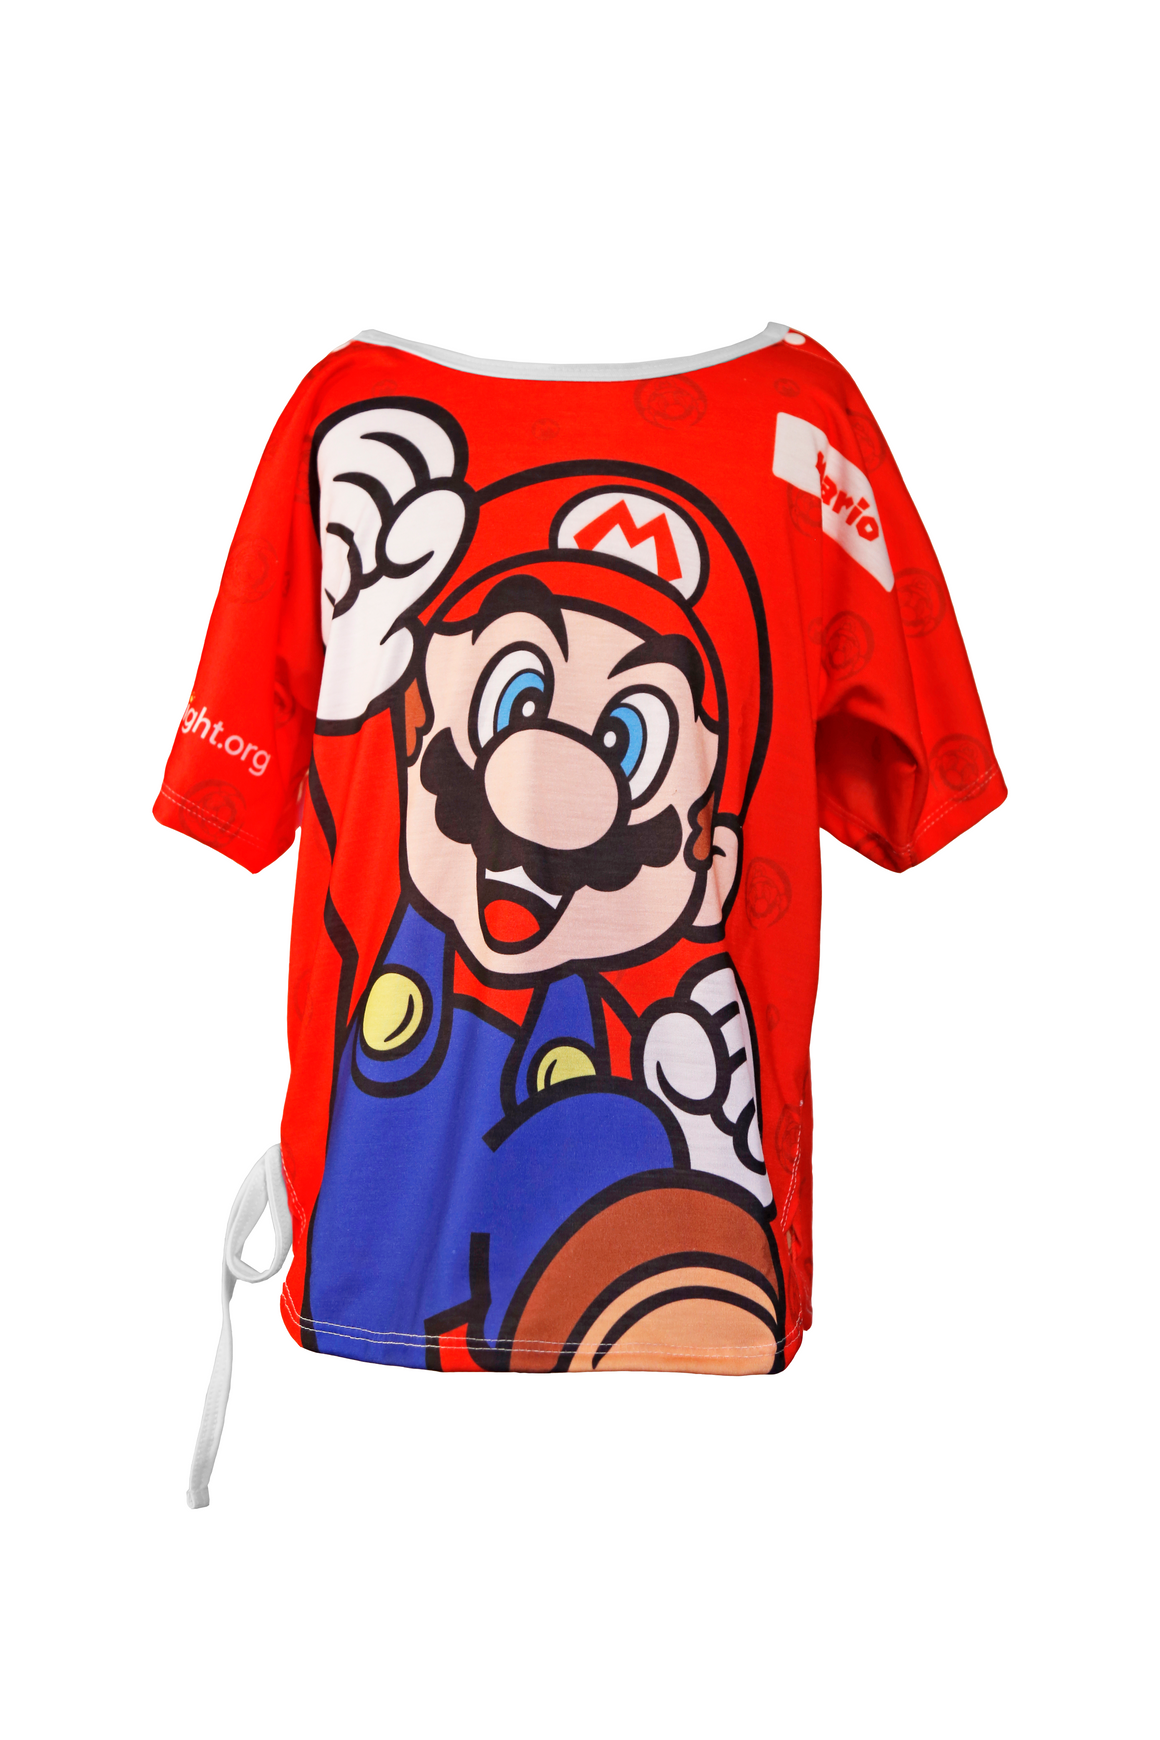 Mario Starlight Gown